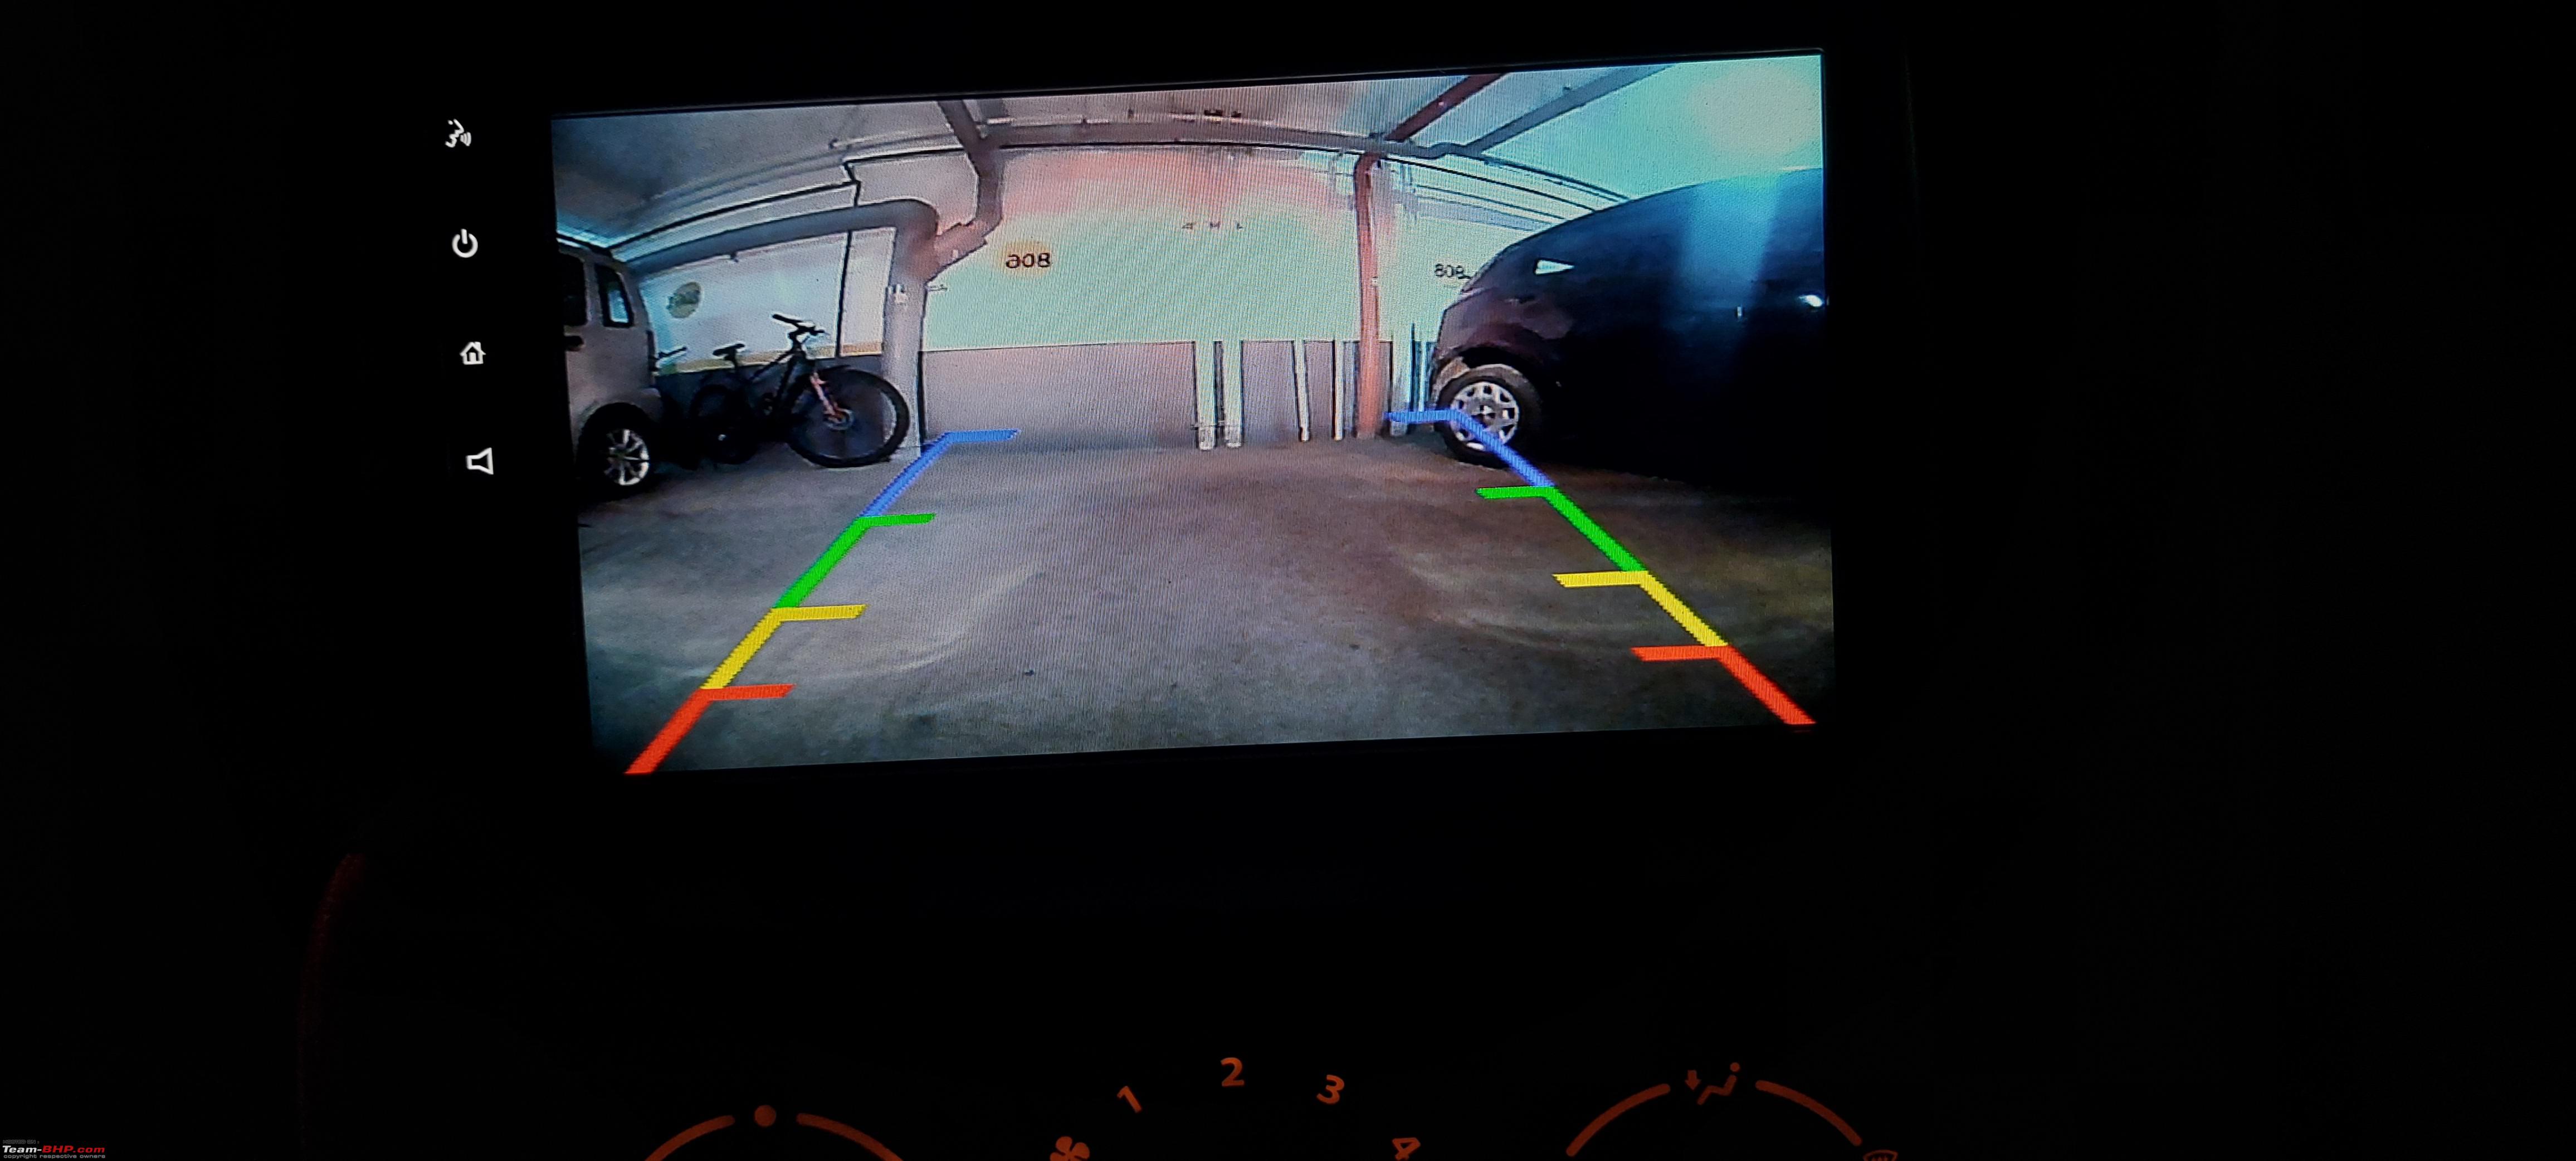 Installed! Front Parking Camera in my Honda City - Team-BHP